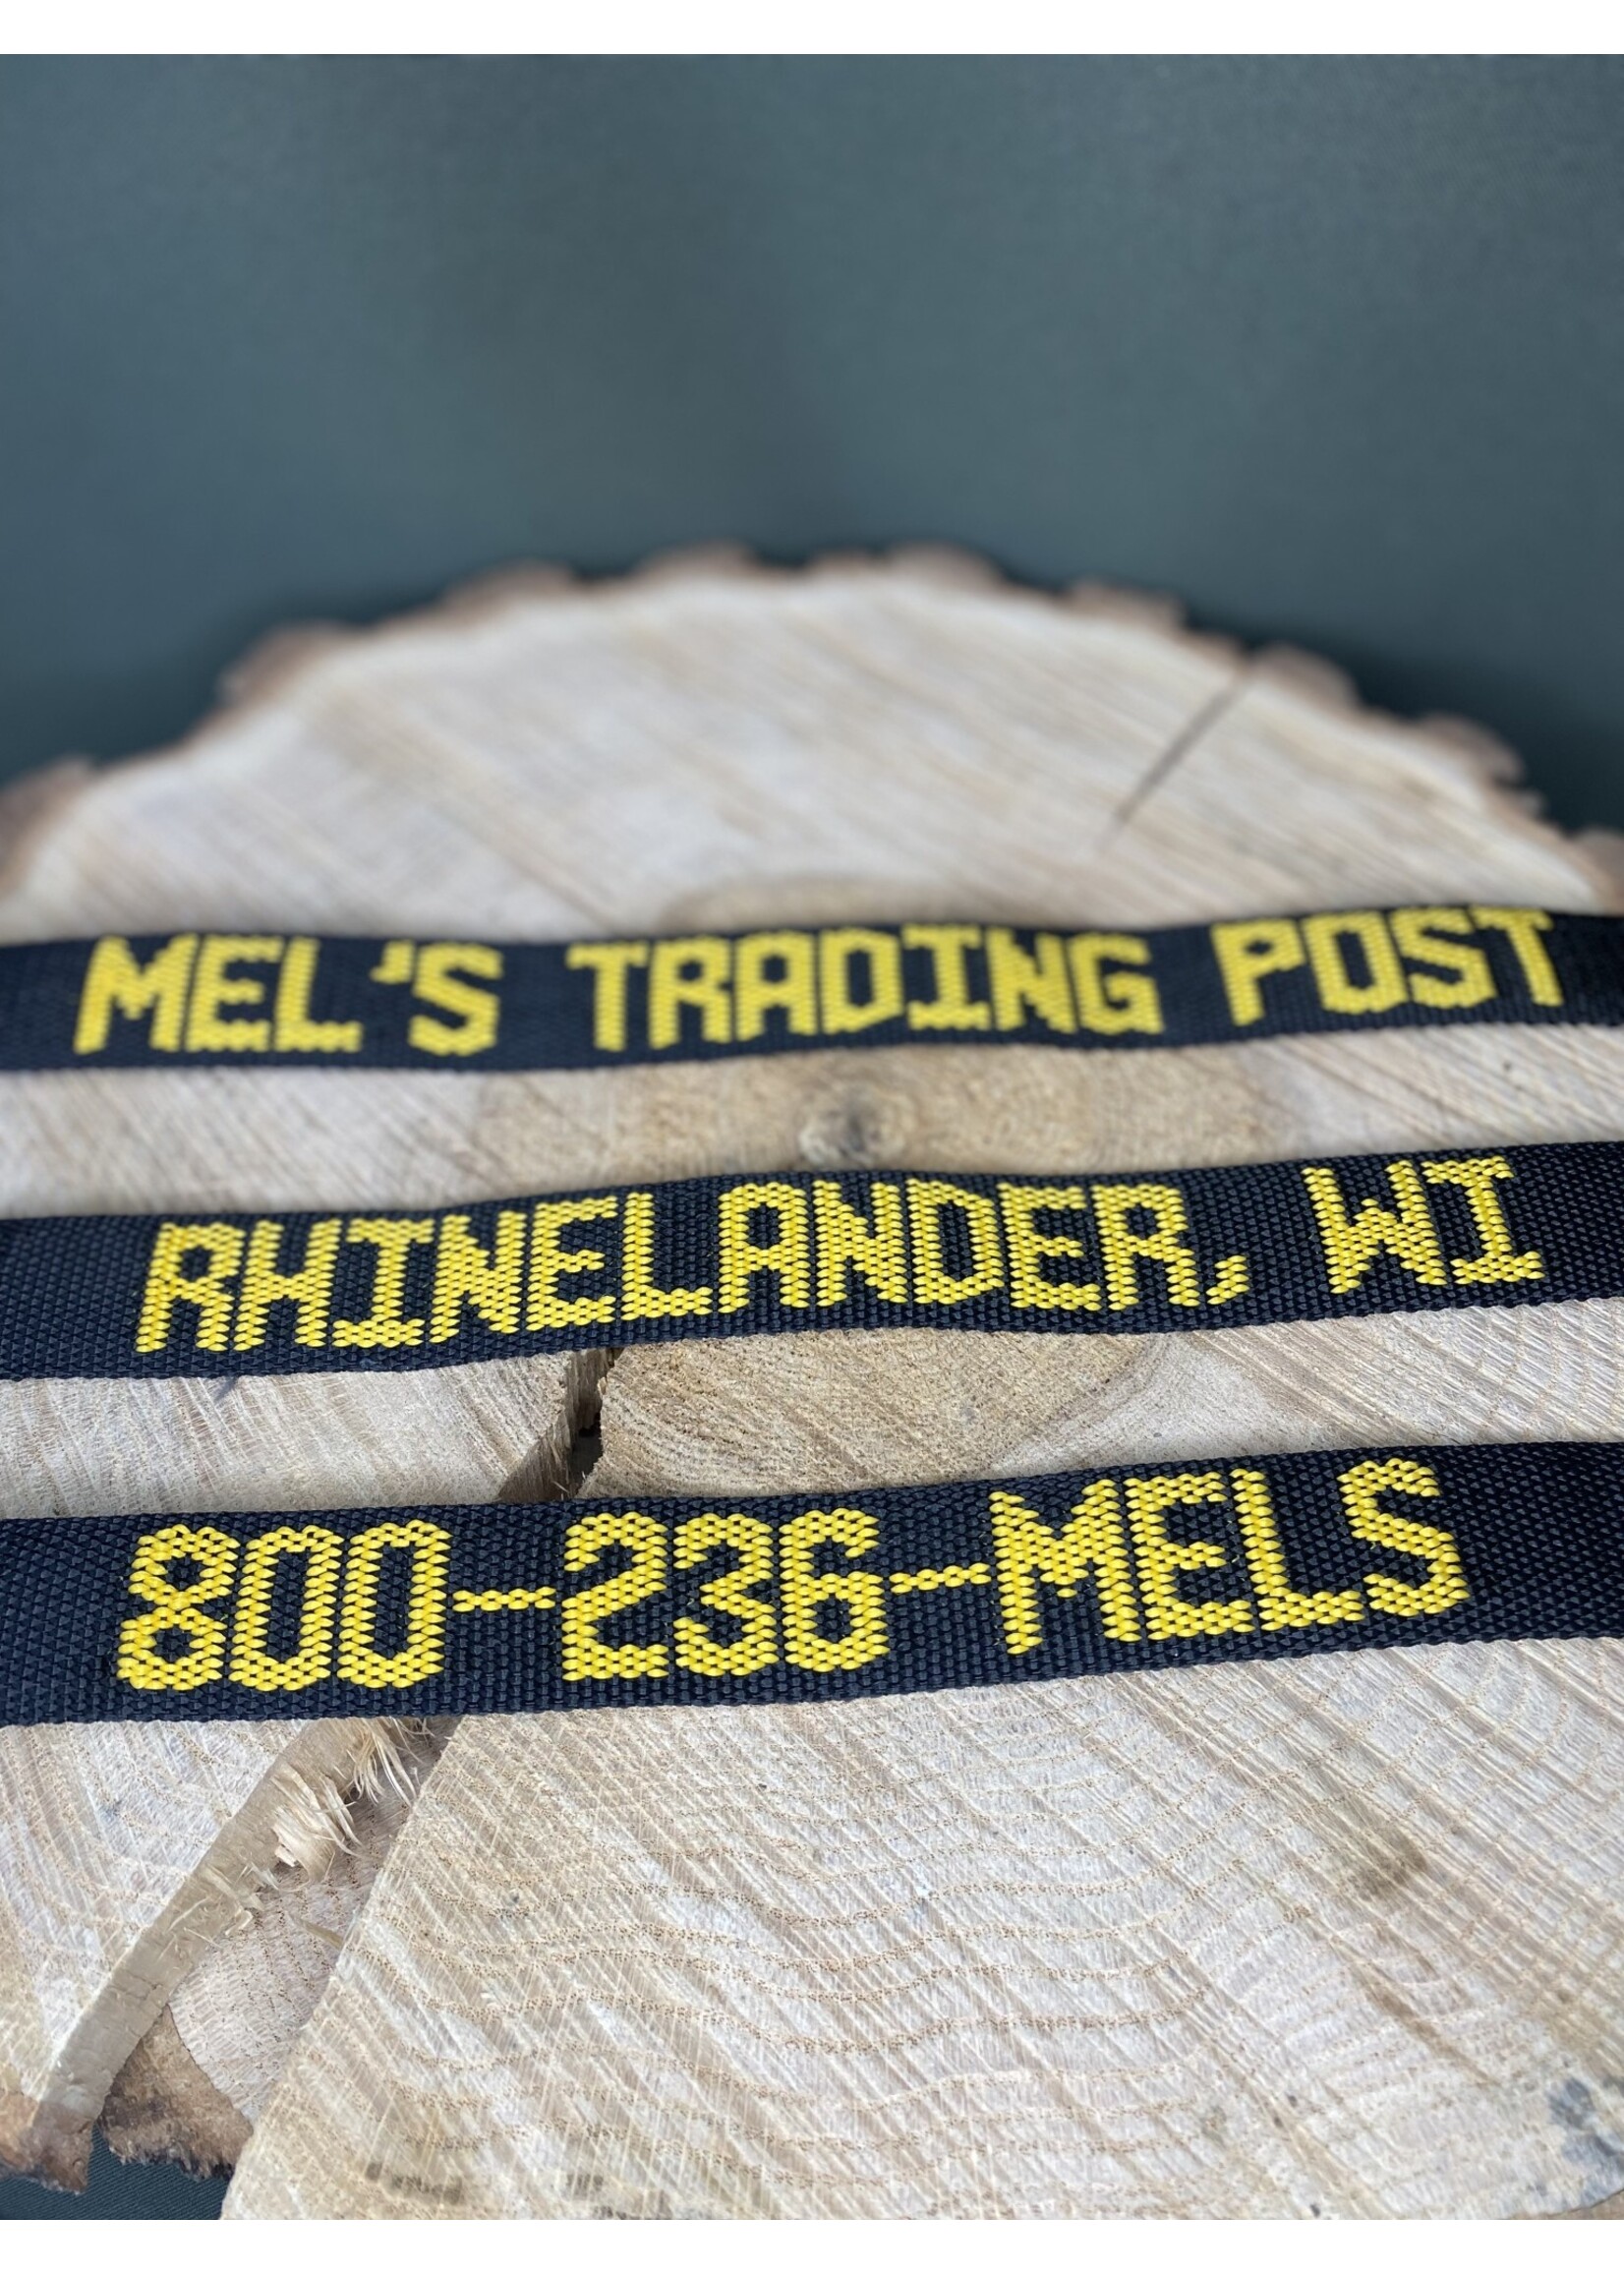 Mel's! Mel's Trading Post Tie Down